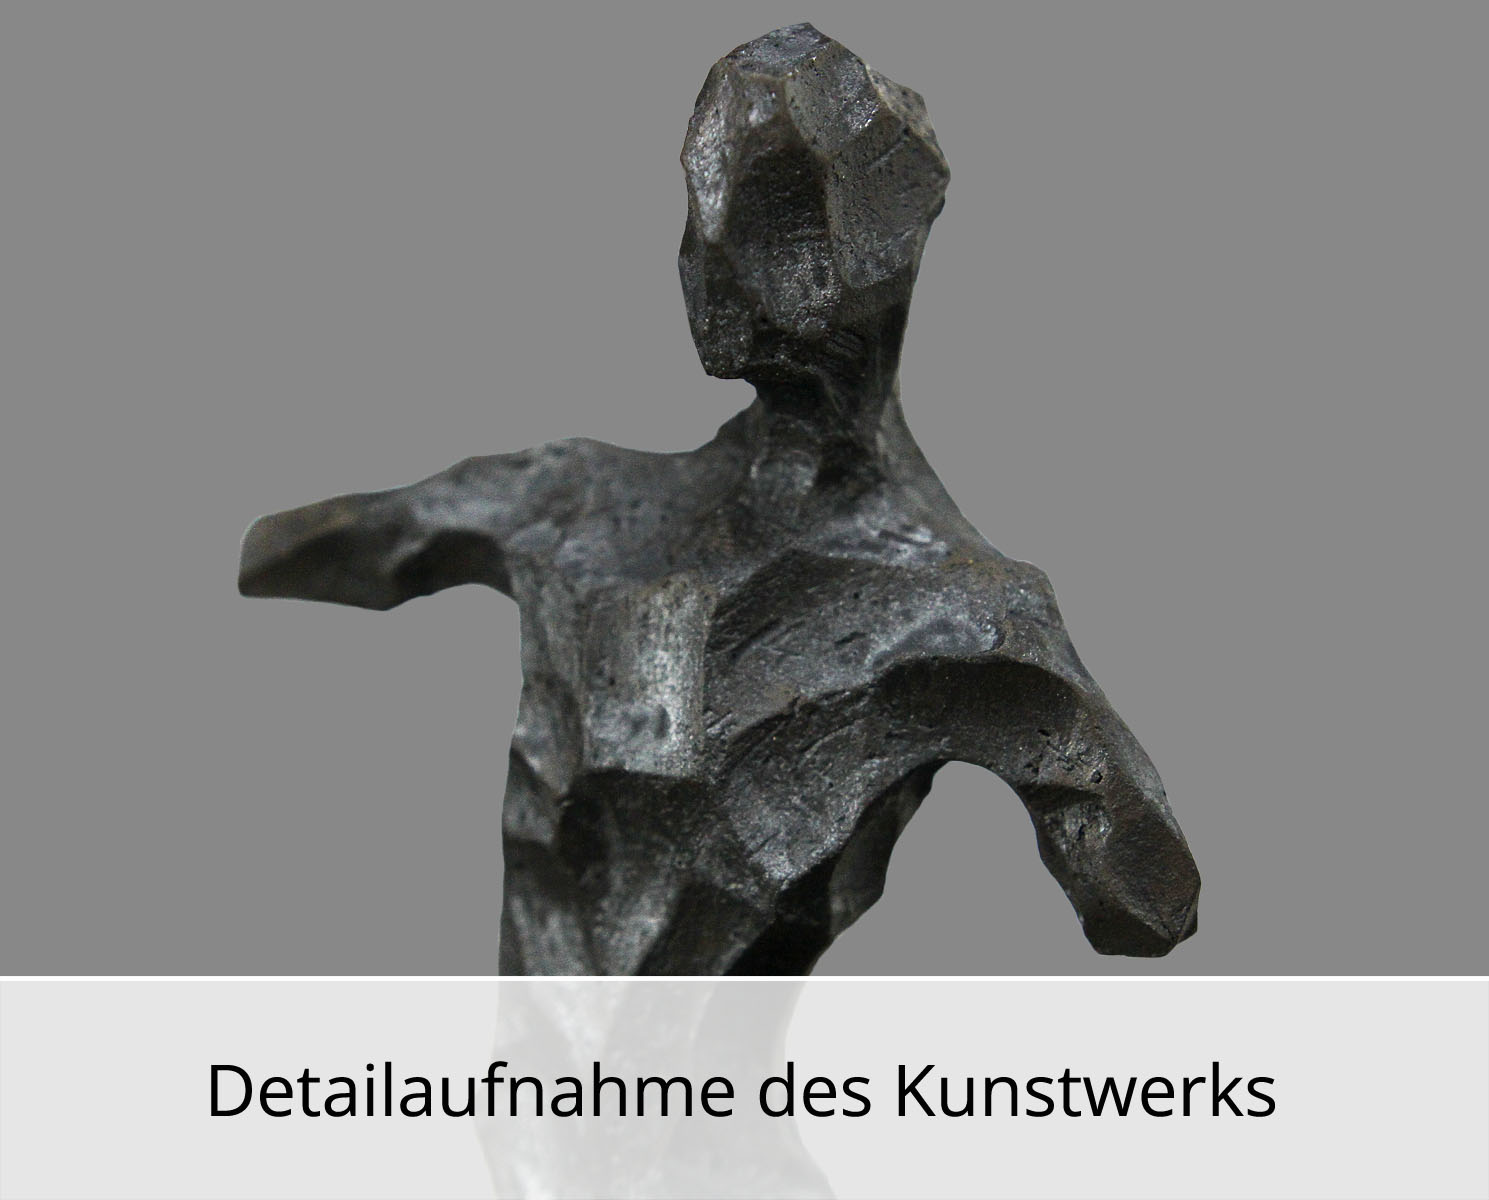 C. Blechschmidt: Tanz, zeitgenössische Skulptur, Original/Unikat